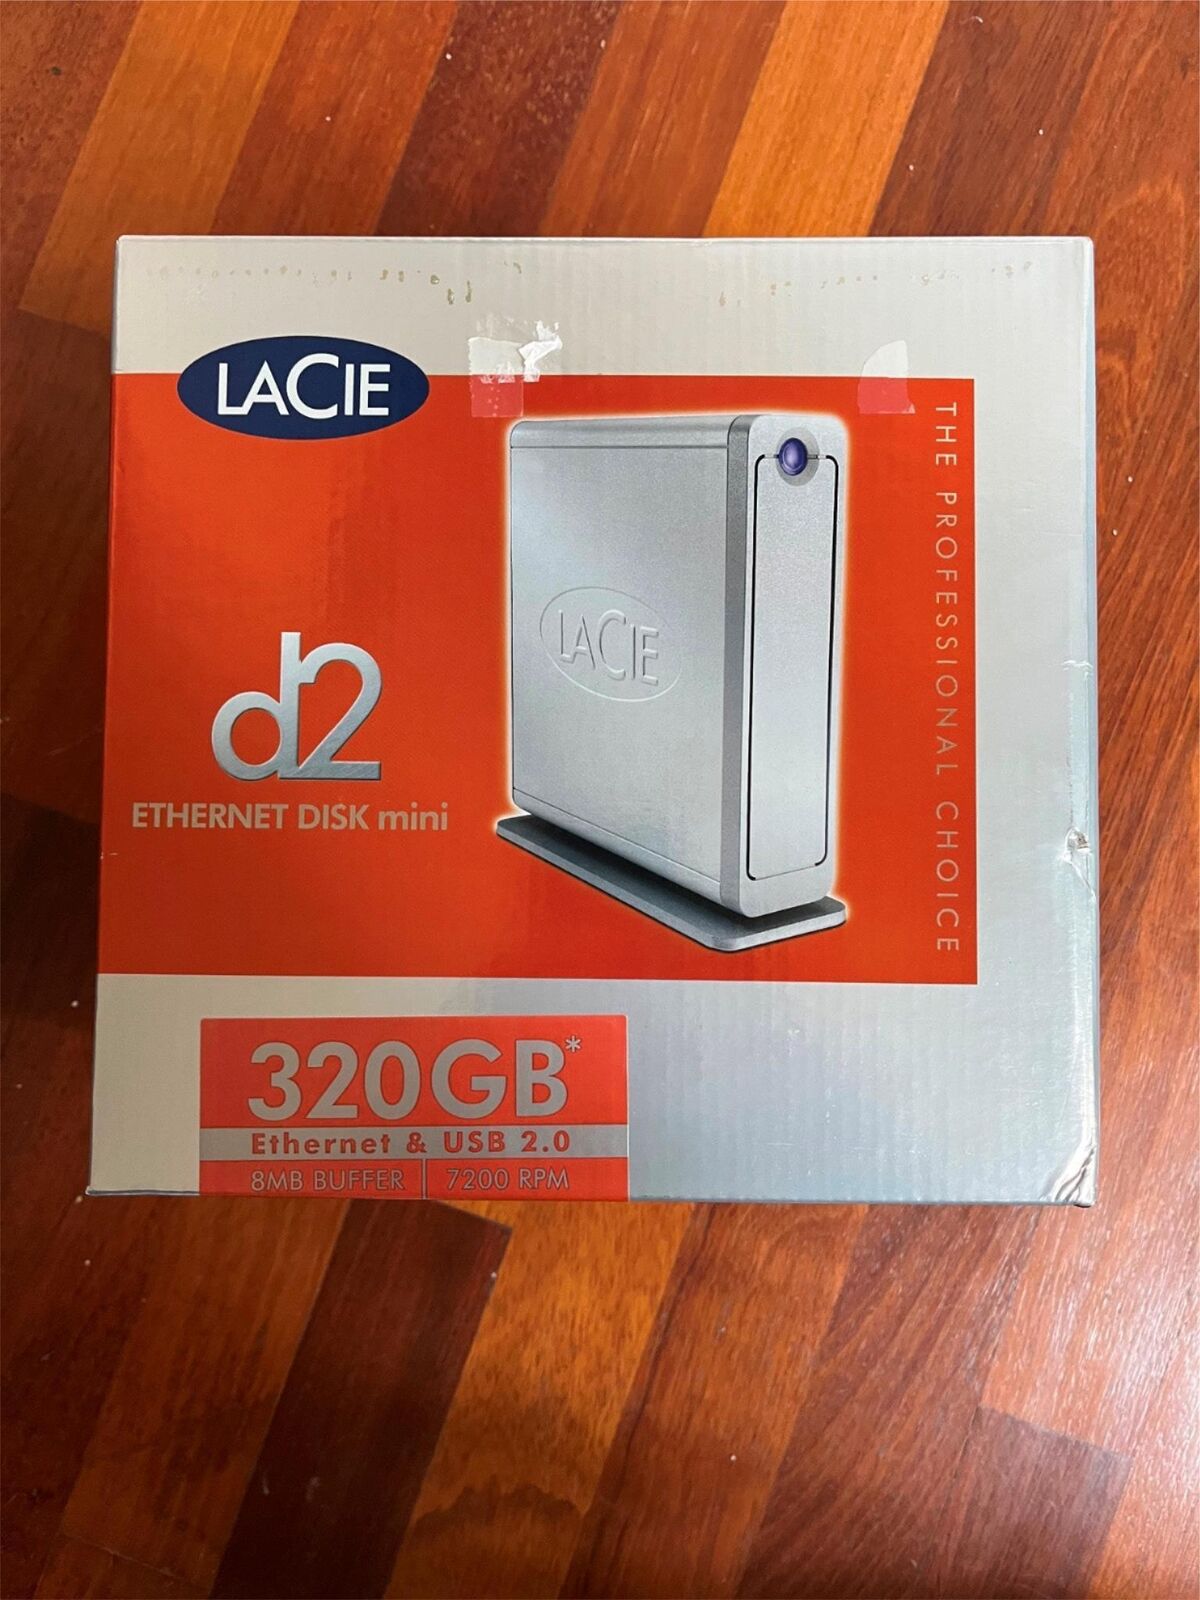 LACIE D2 320GB Ethernet Disk Mini Ethernet and USB 2.0 SKU: 301173U